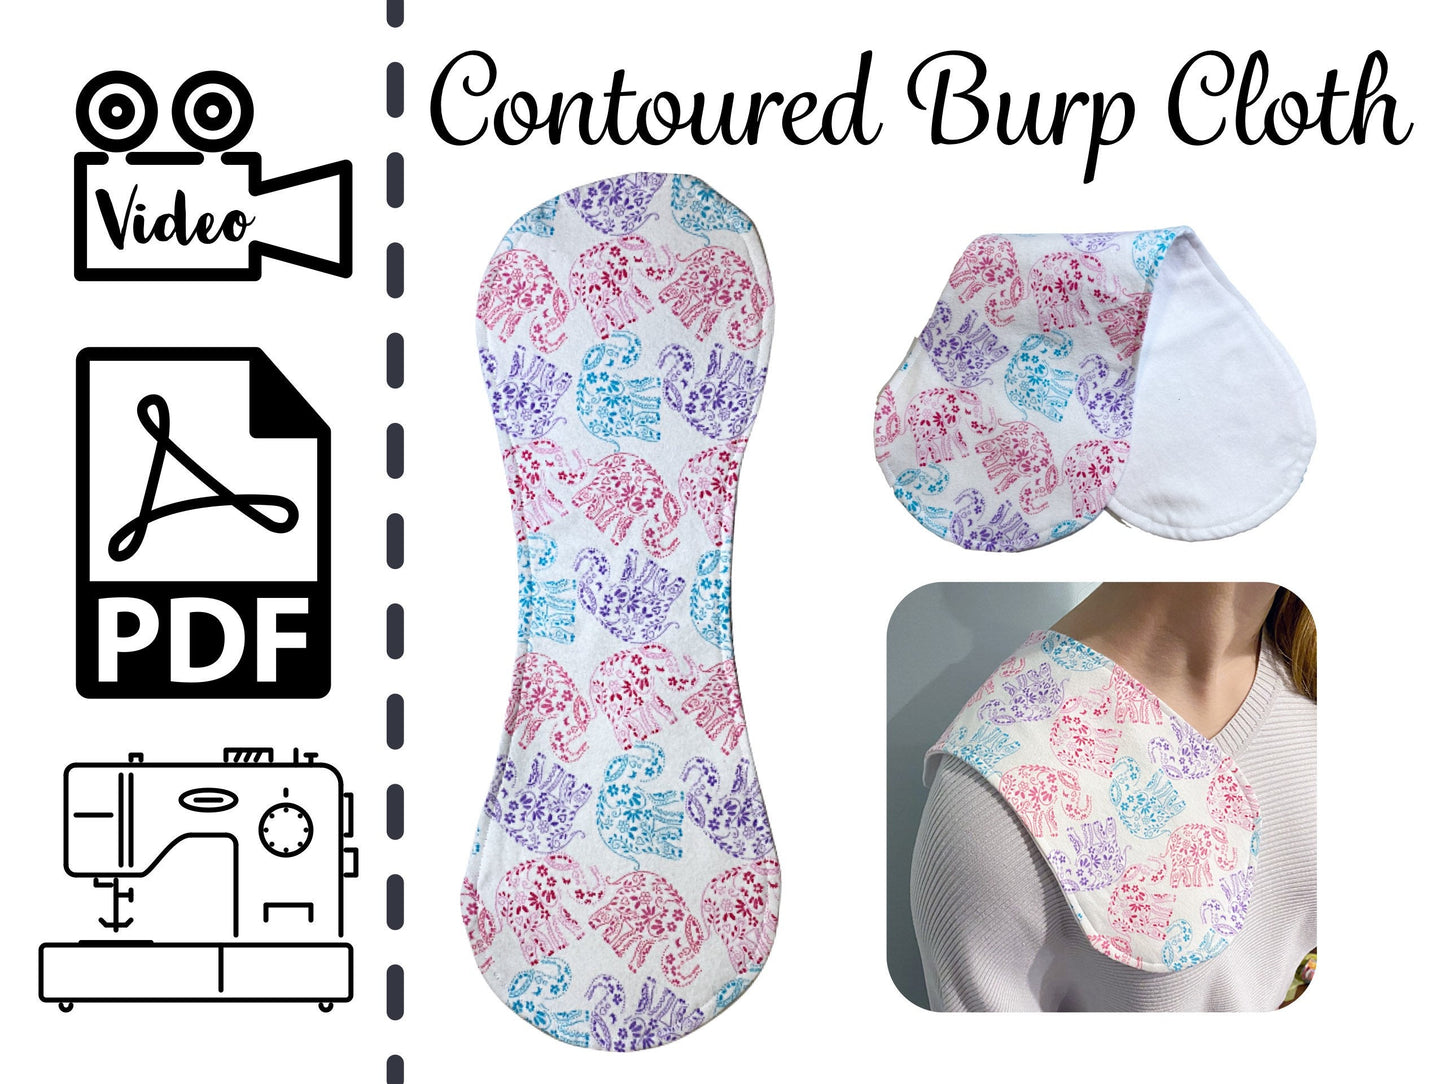 Countered Burp Cloth